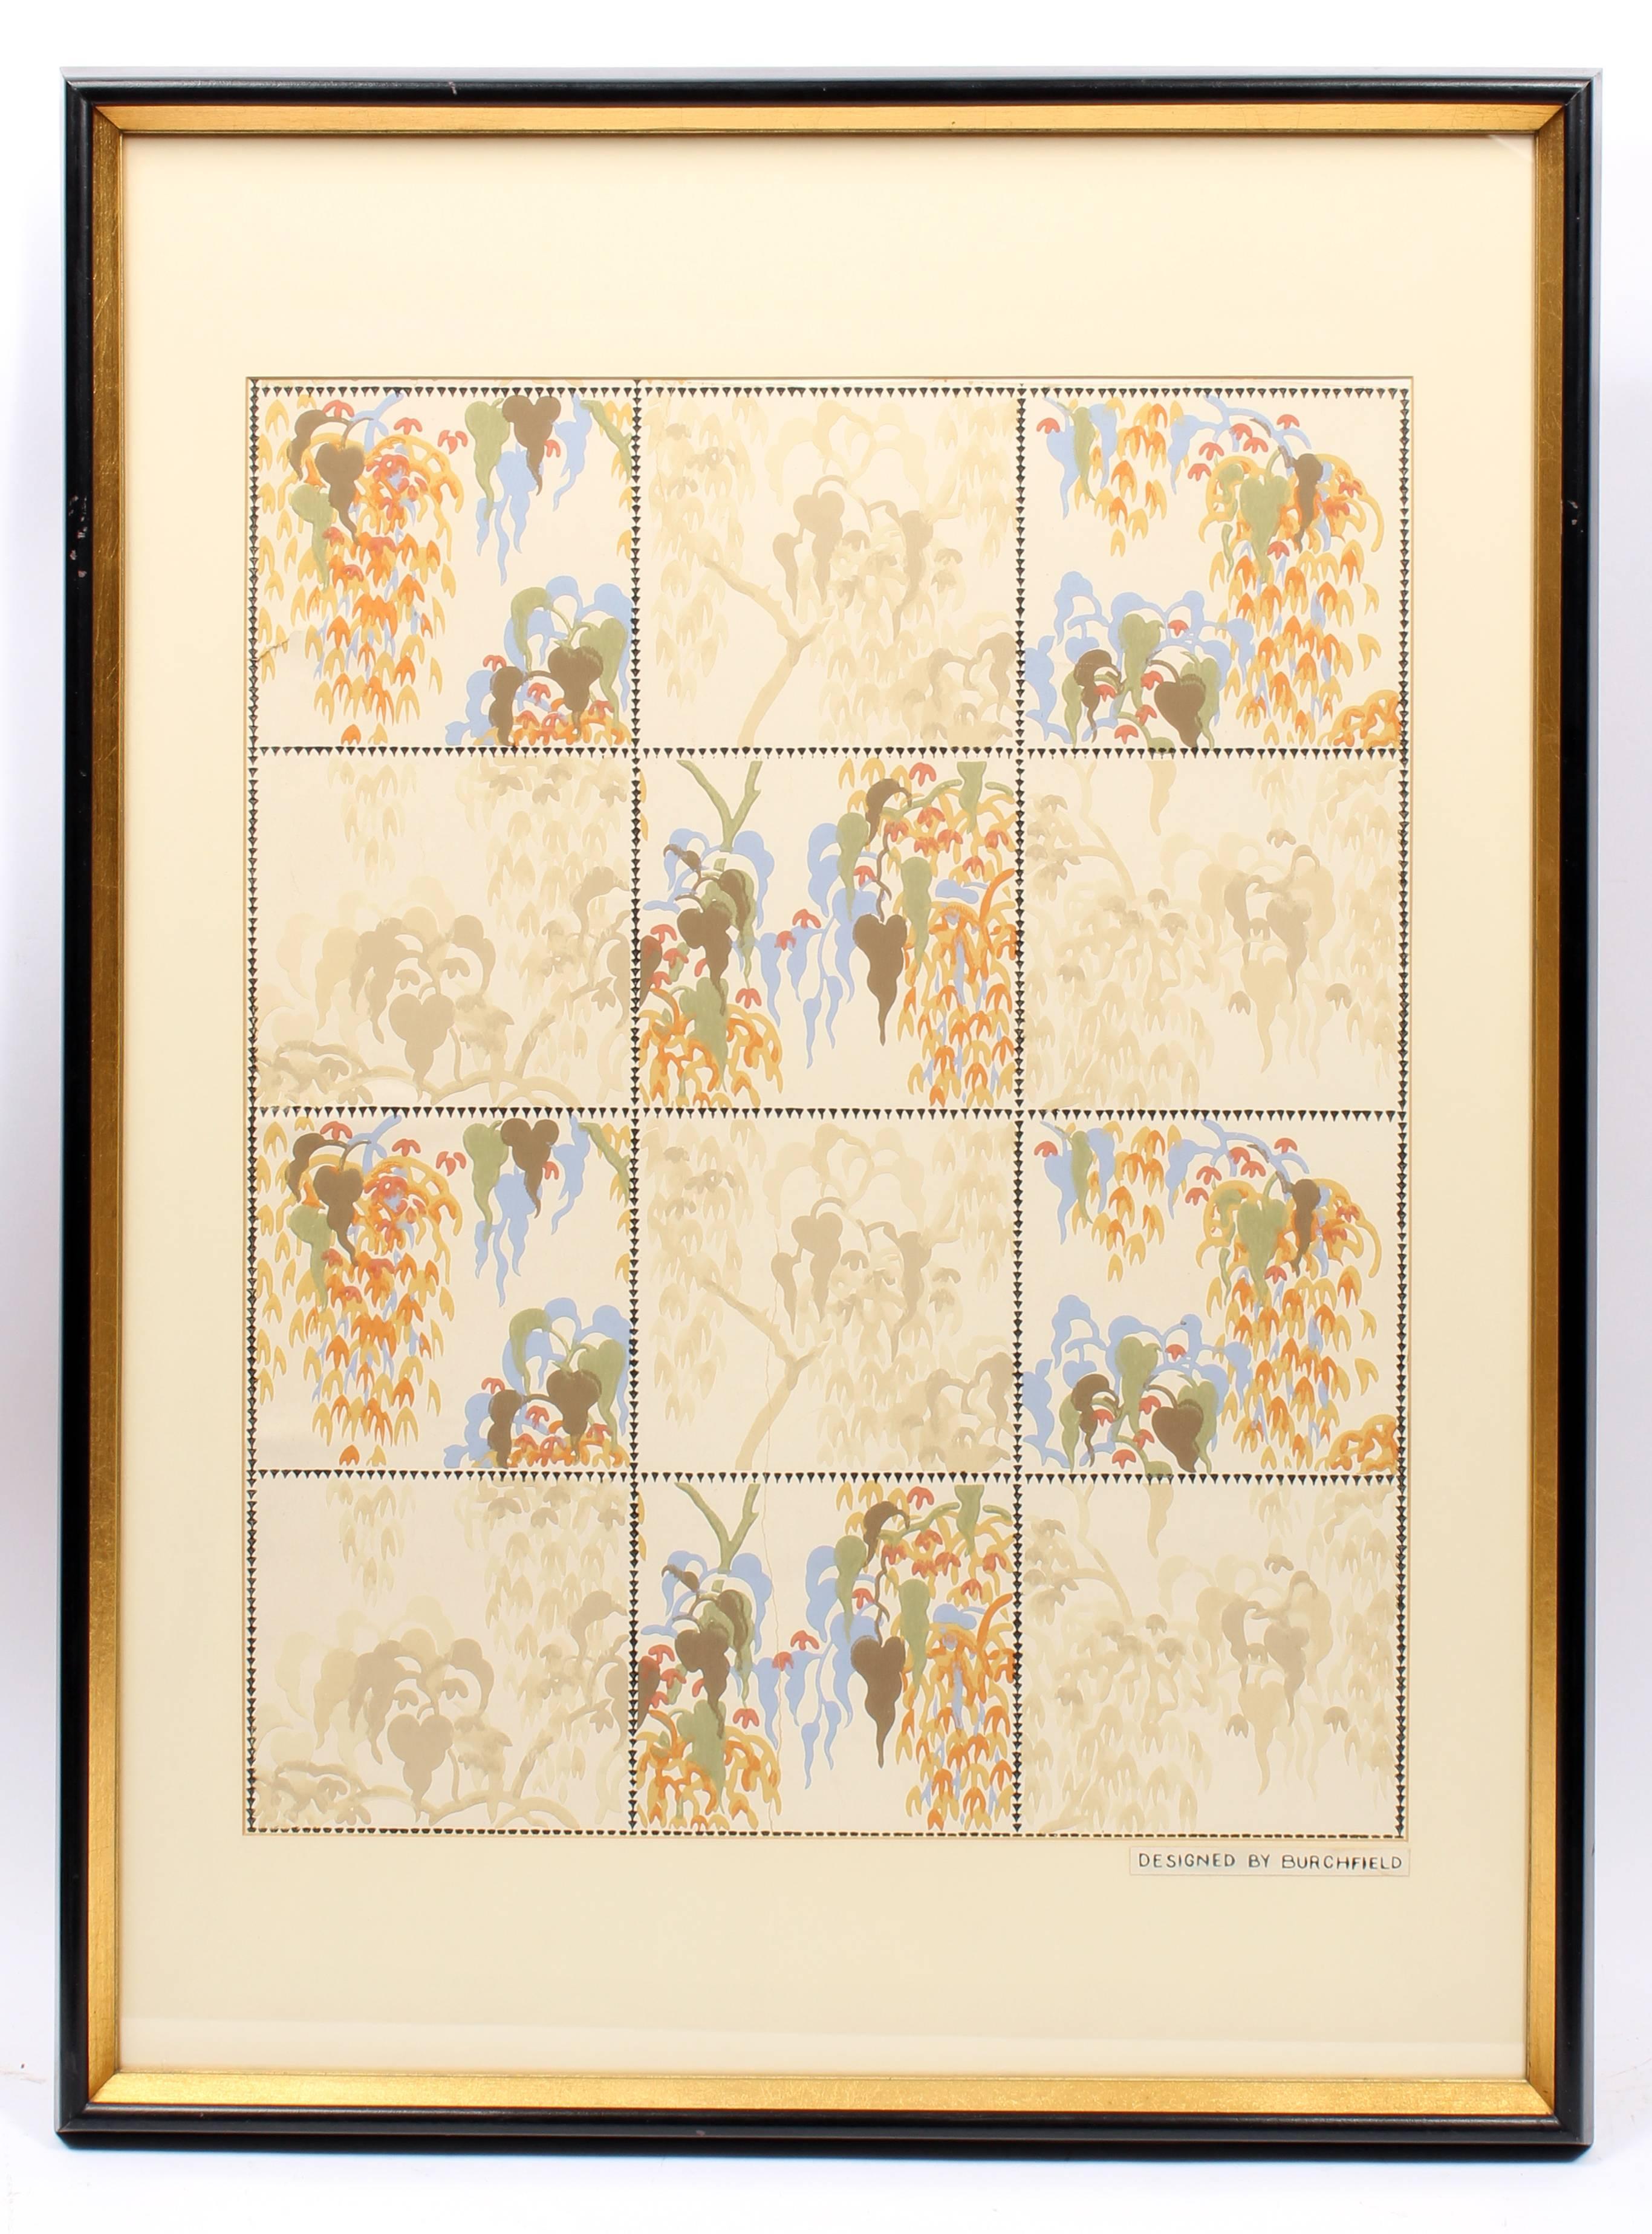 Modernist Wall Paper Pattern - Print by Charles E. Burchfield